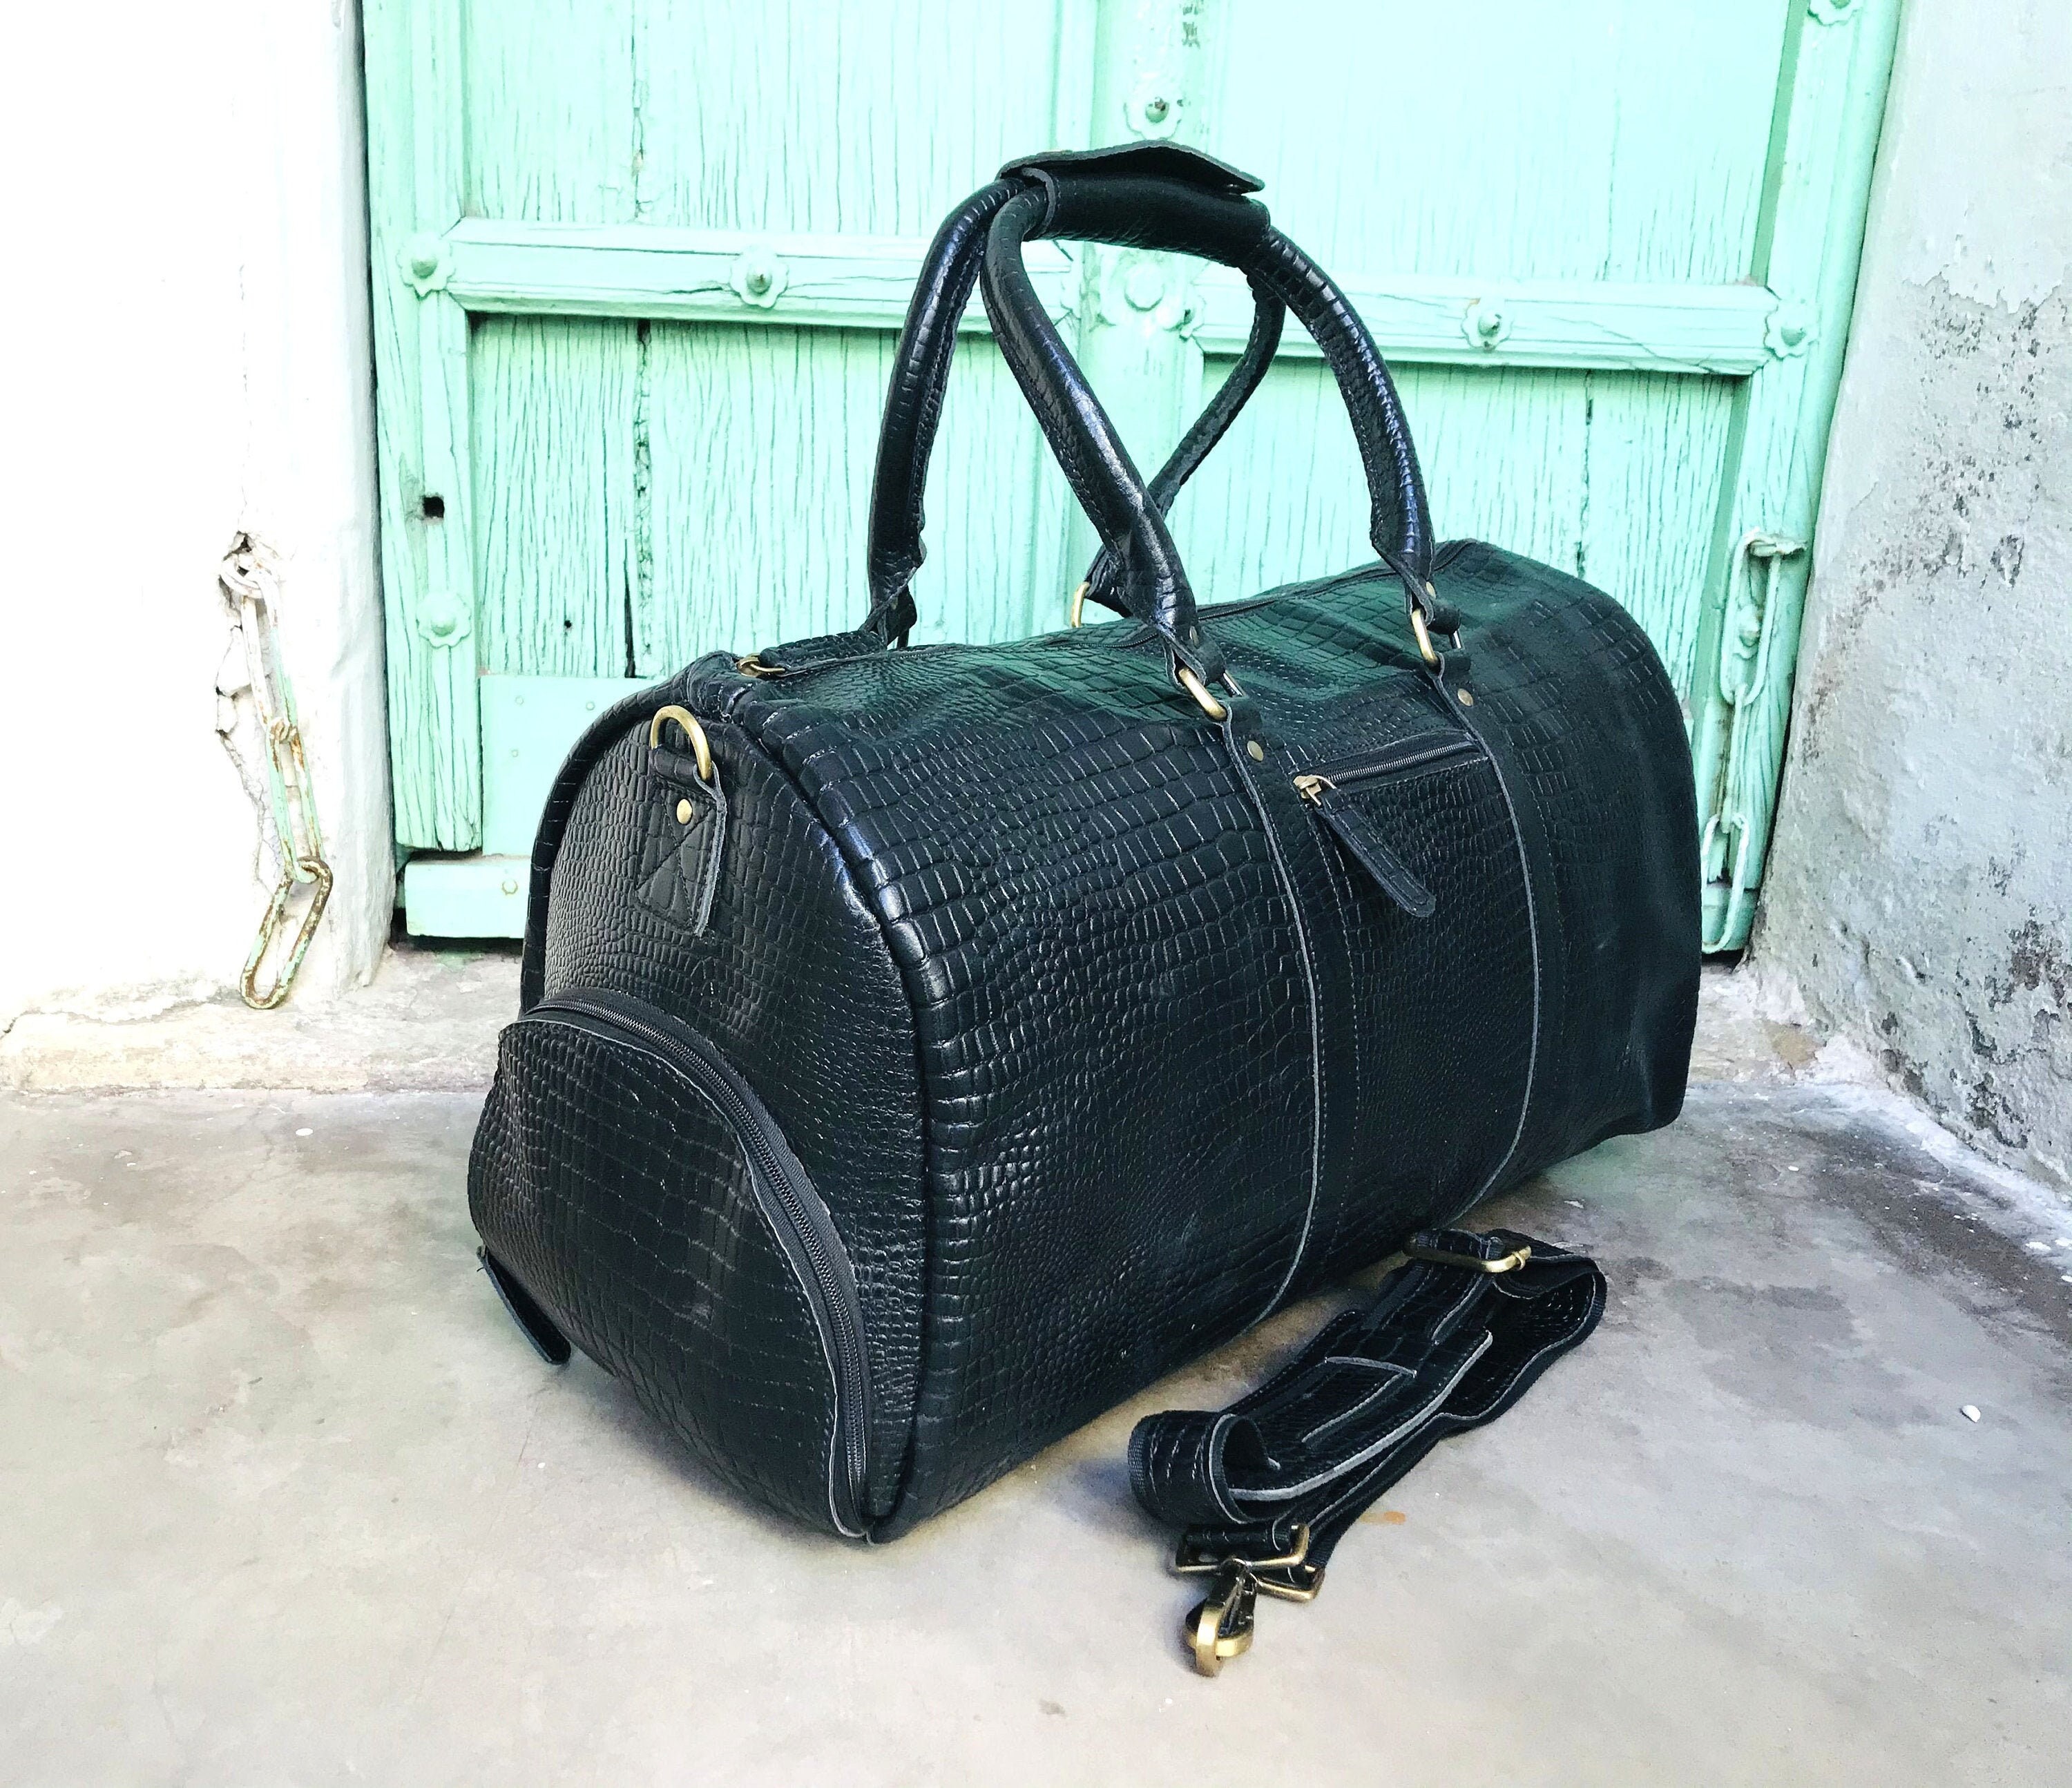 20 in Buffalo Leather Duffle Bag Travel Luggage Handbag Aircabin